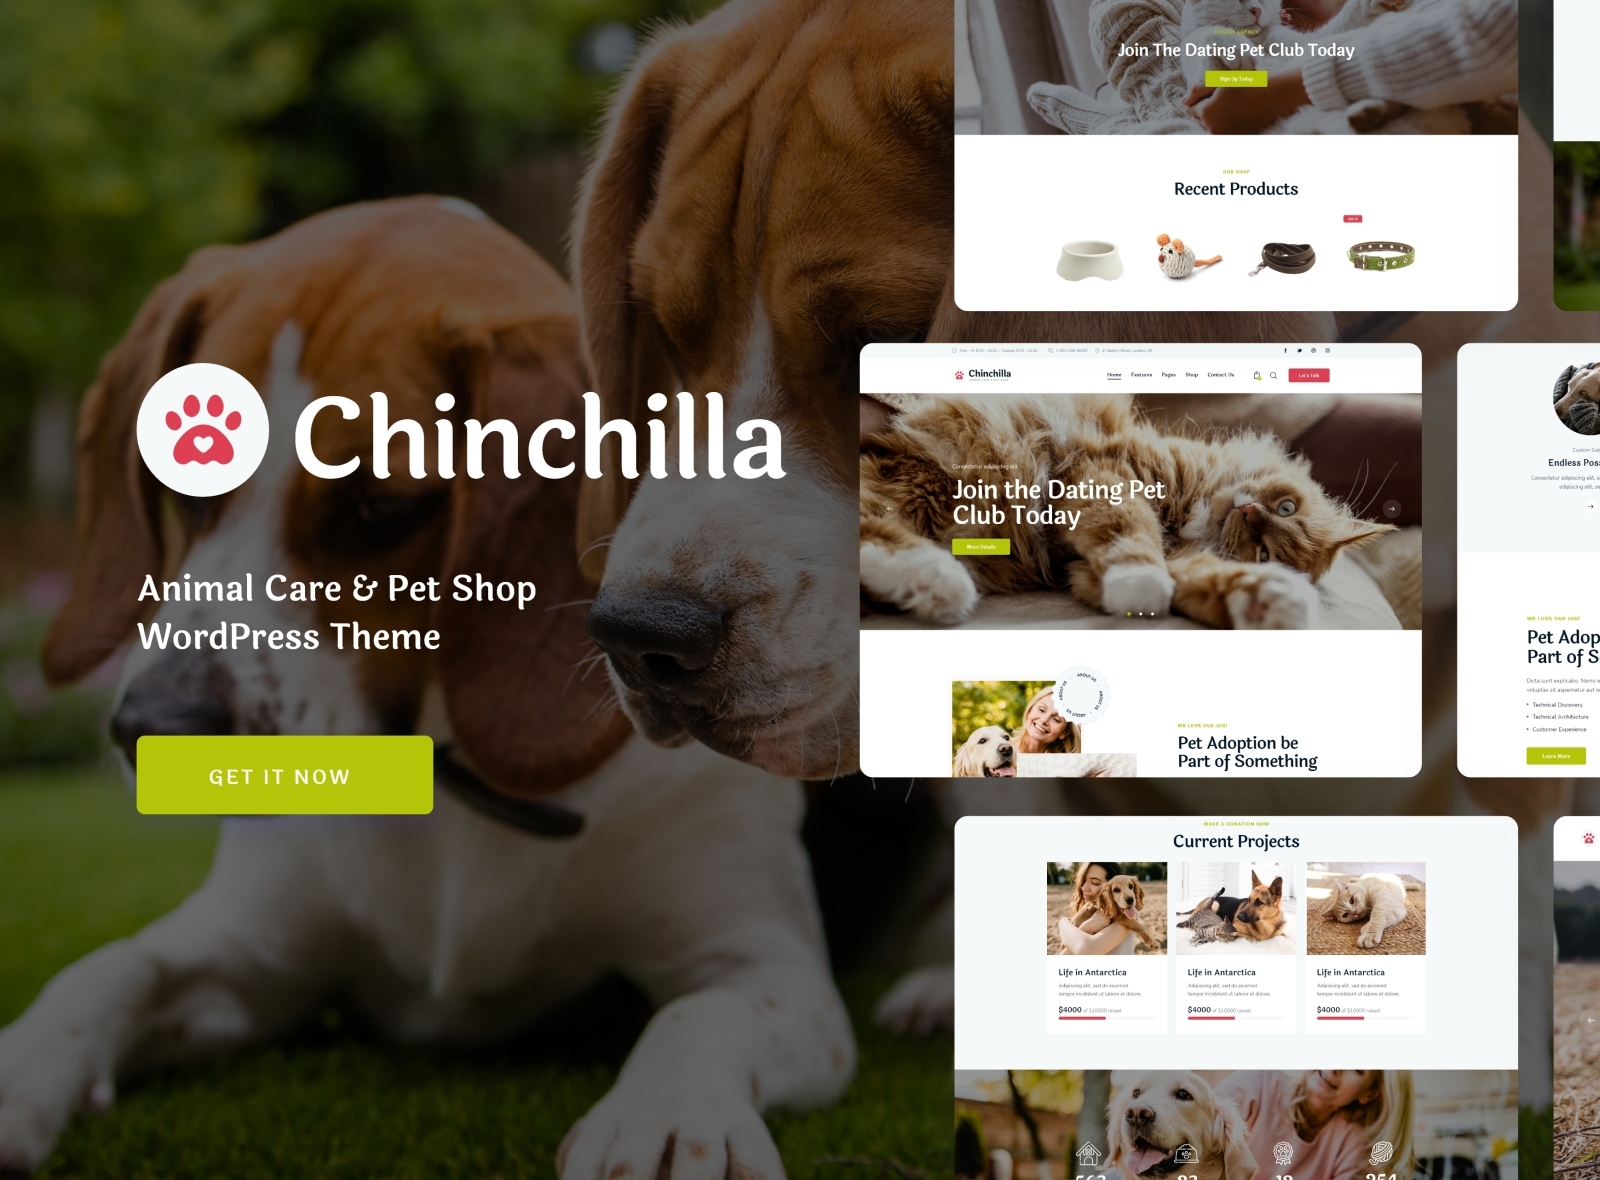 Chinchilla - Animal Care & Pet Shop WordPress Theme by Axiom Themes on  Dribbble